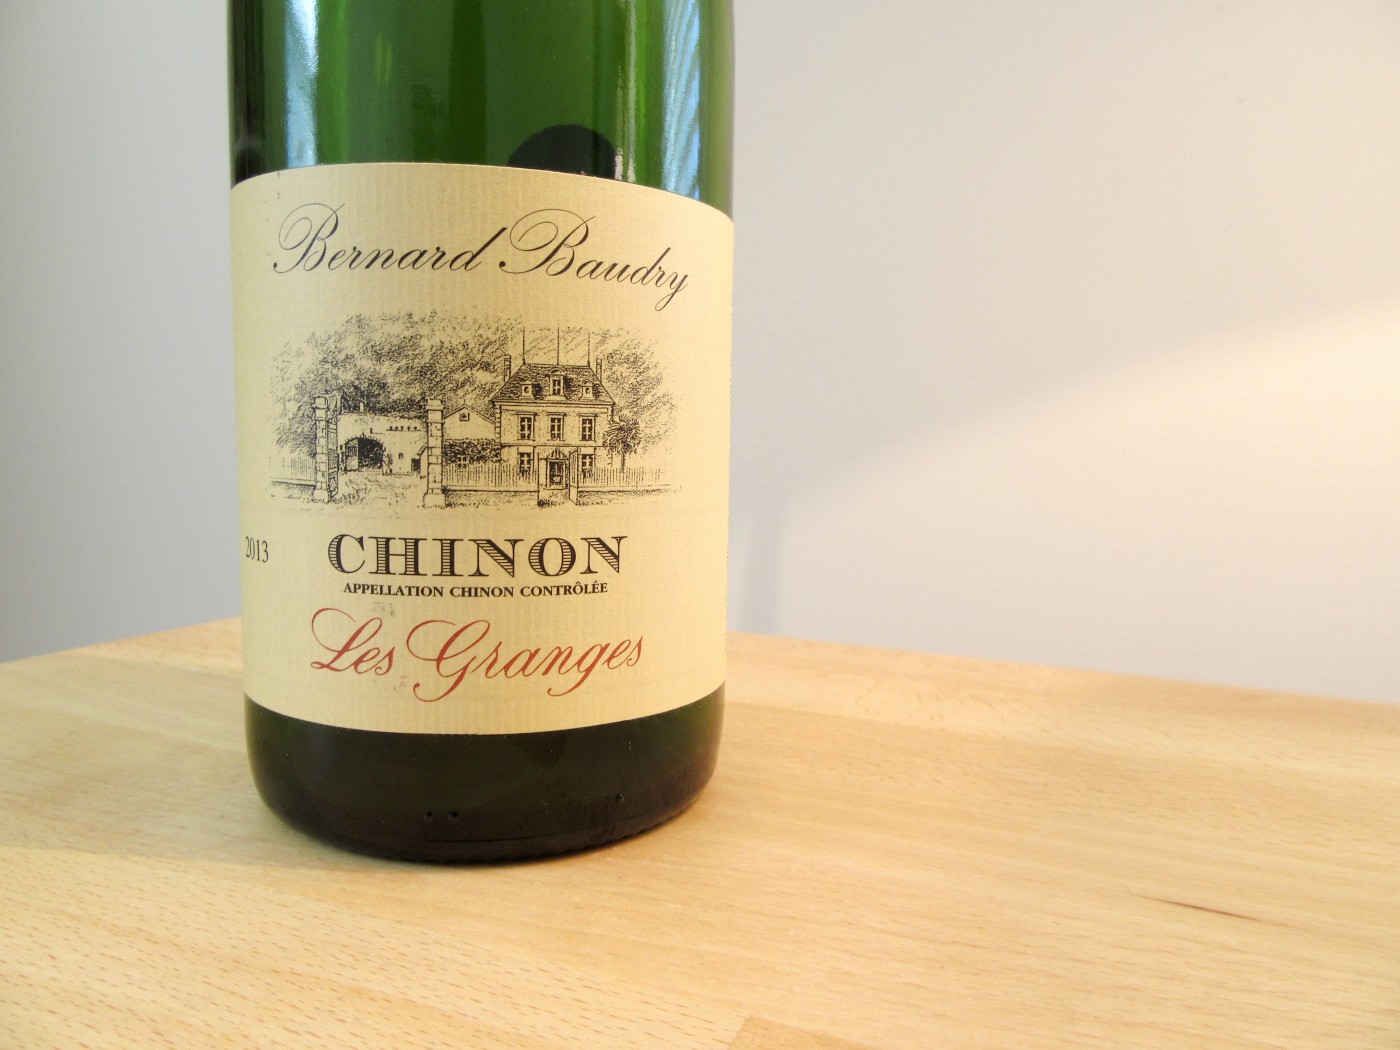 Bernard Baudry, Les Granges Chinon 2013, Loire, France, Wine Casual